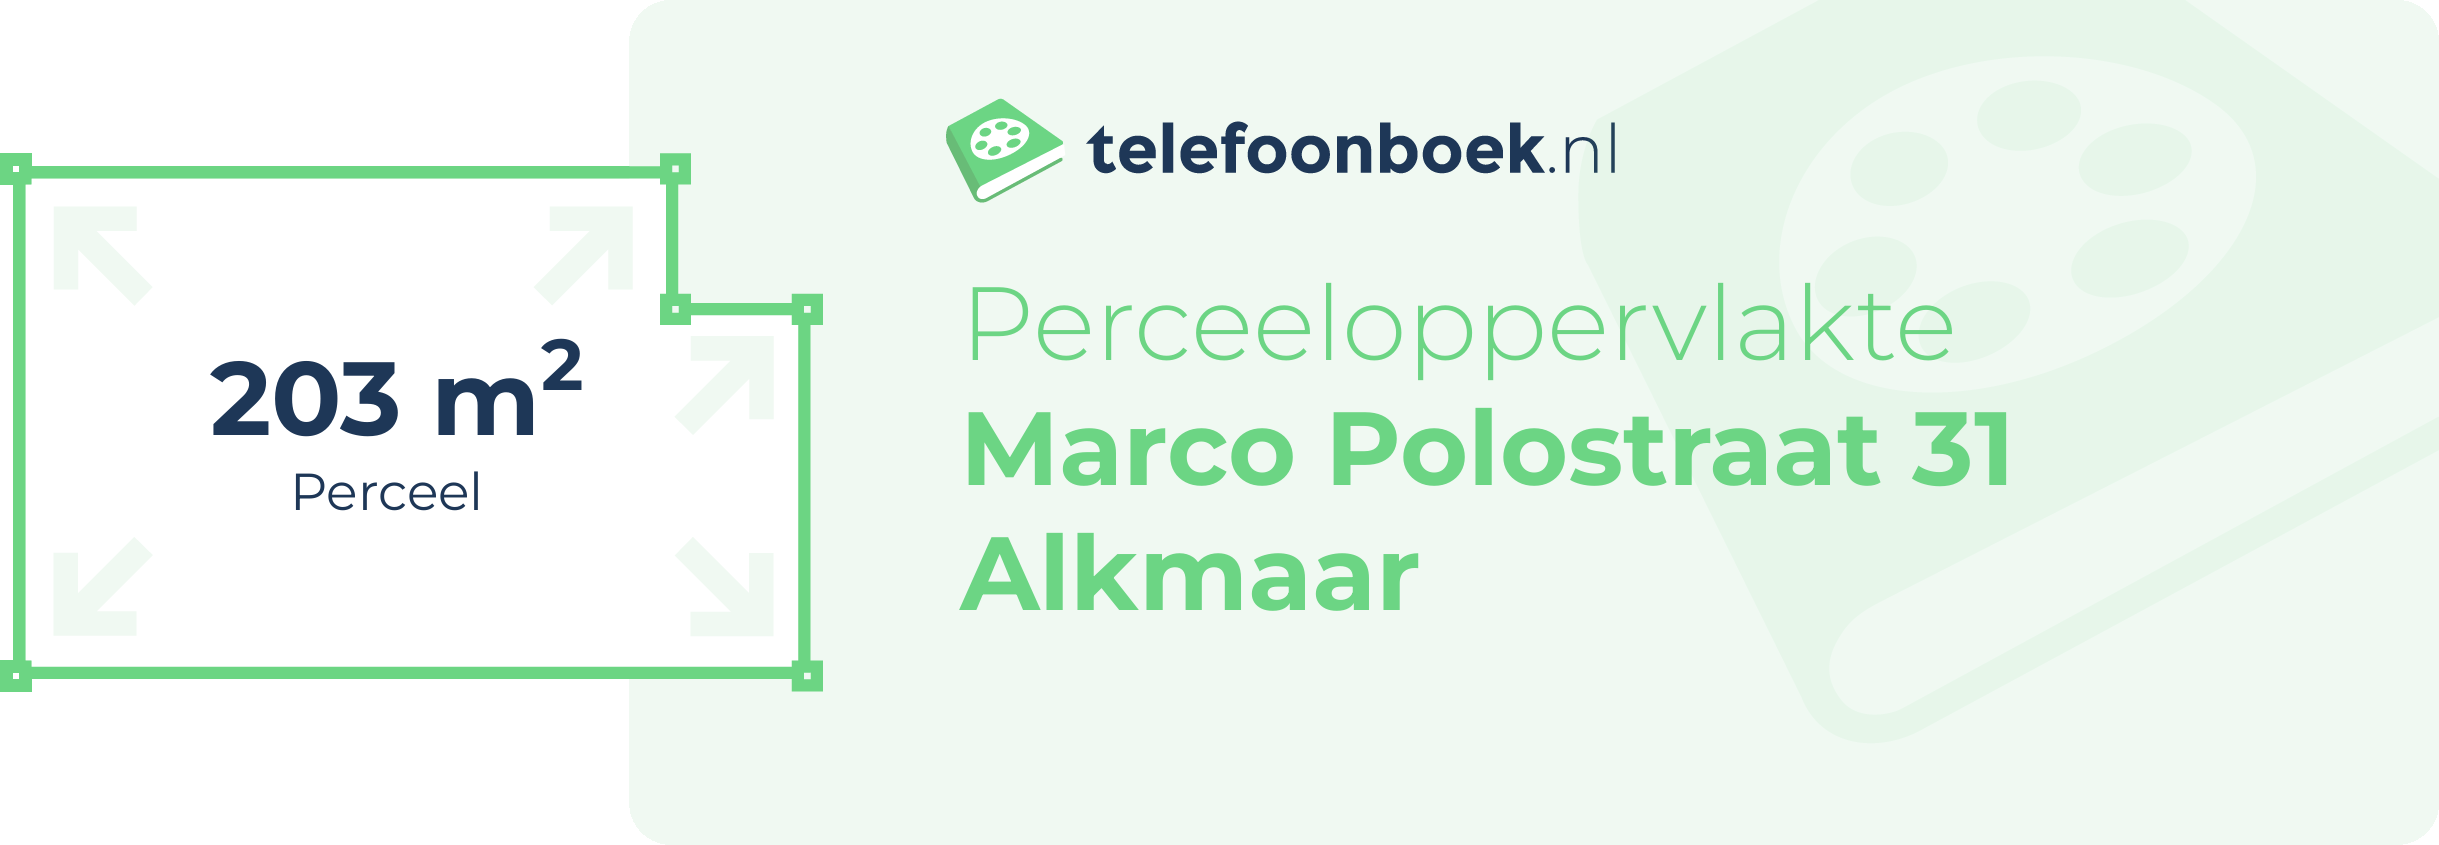 Perceeloppervlakte Marco Polostraat 31 Alkmaar